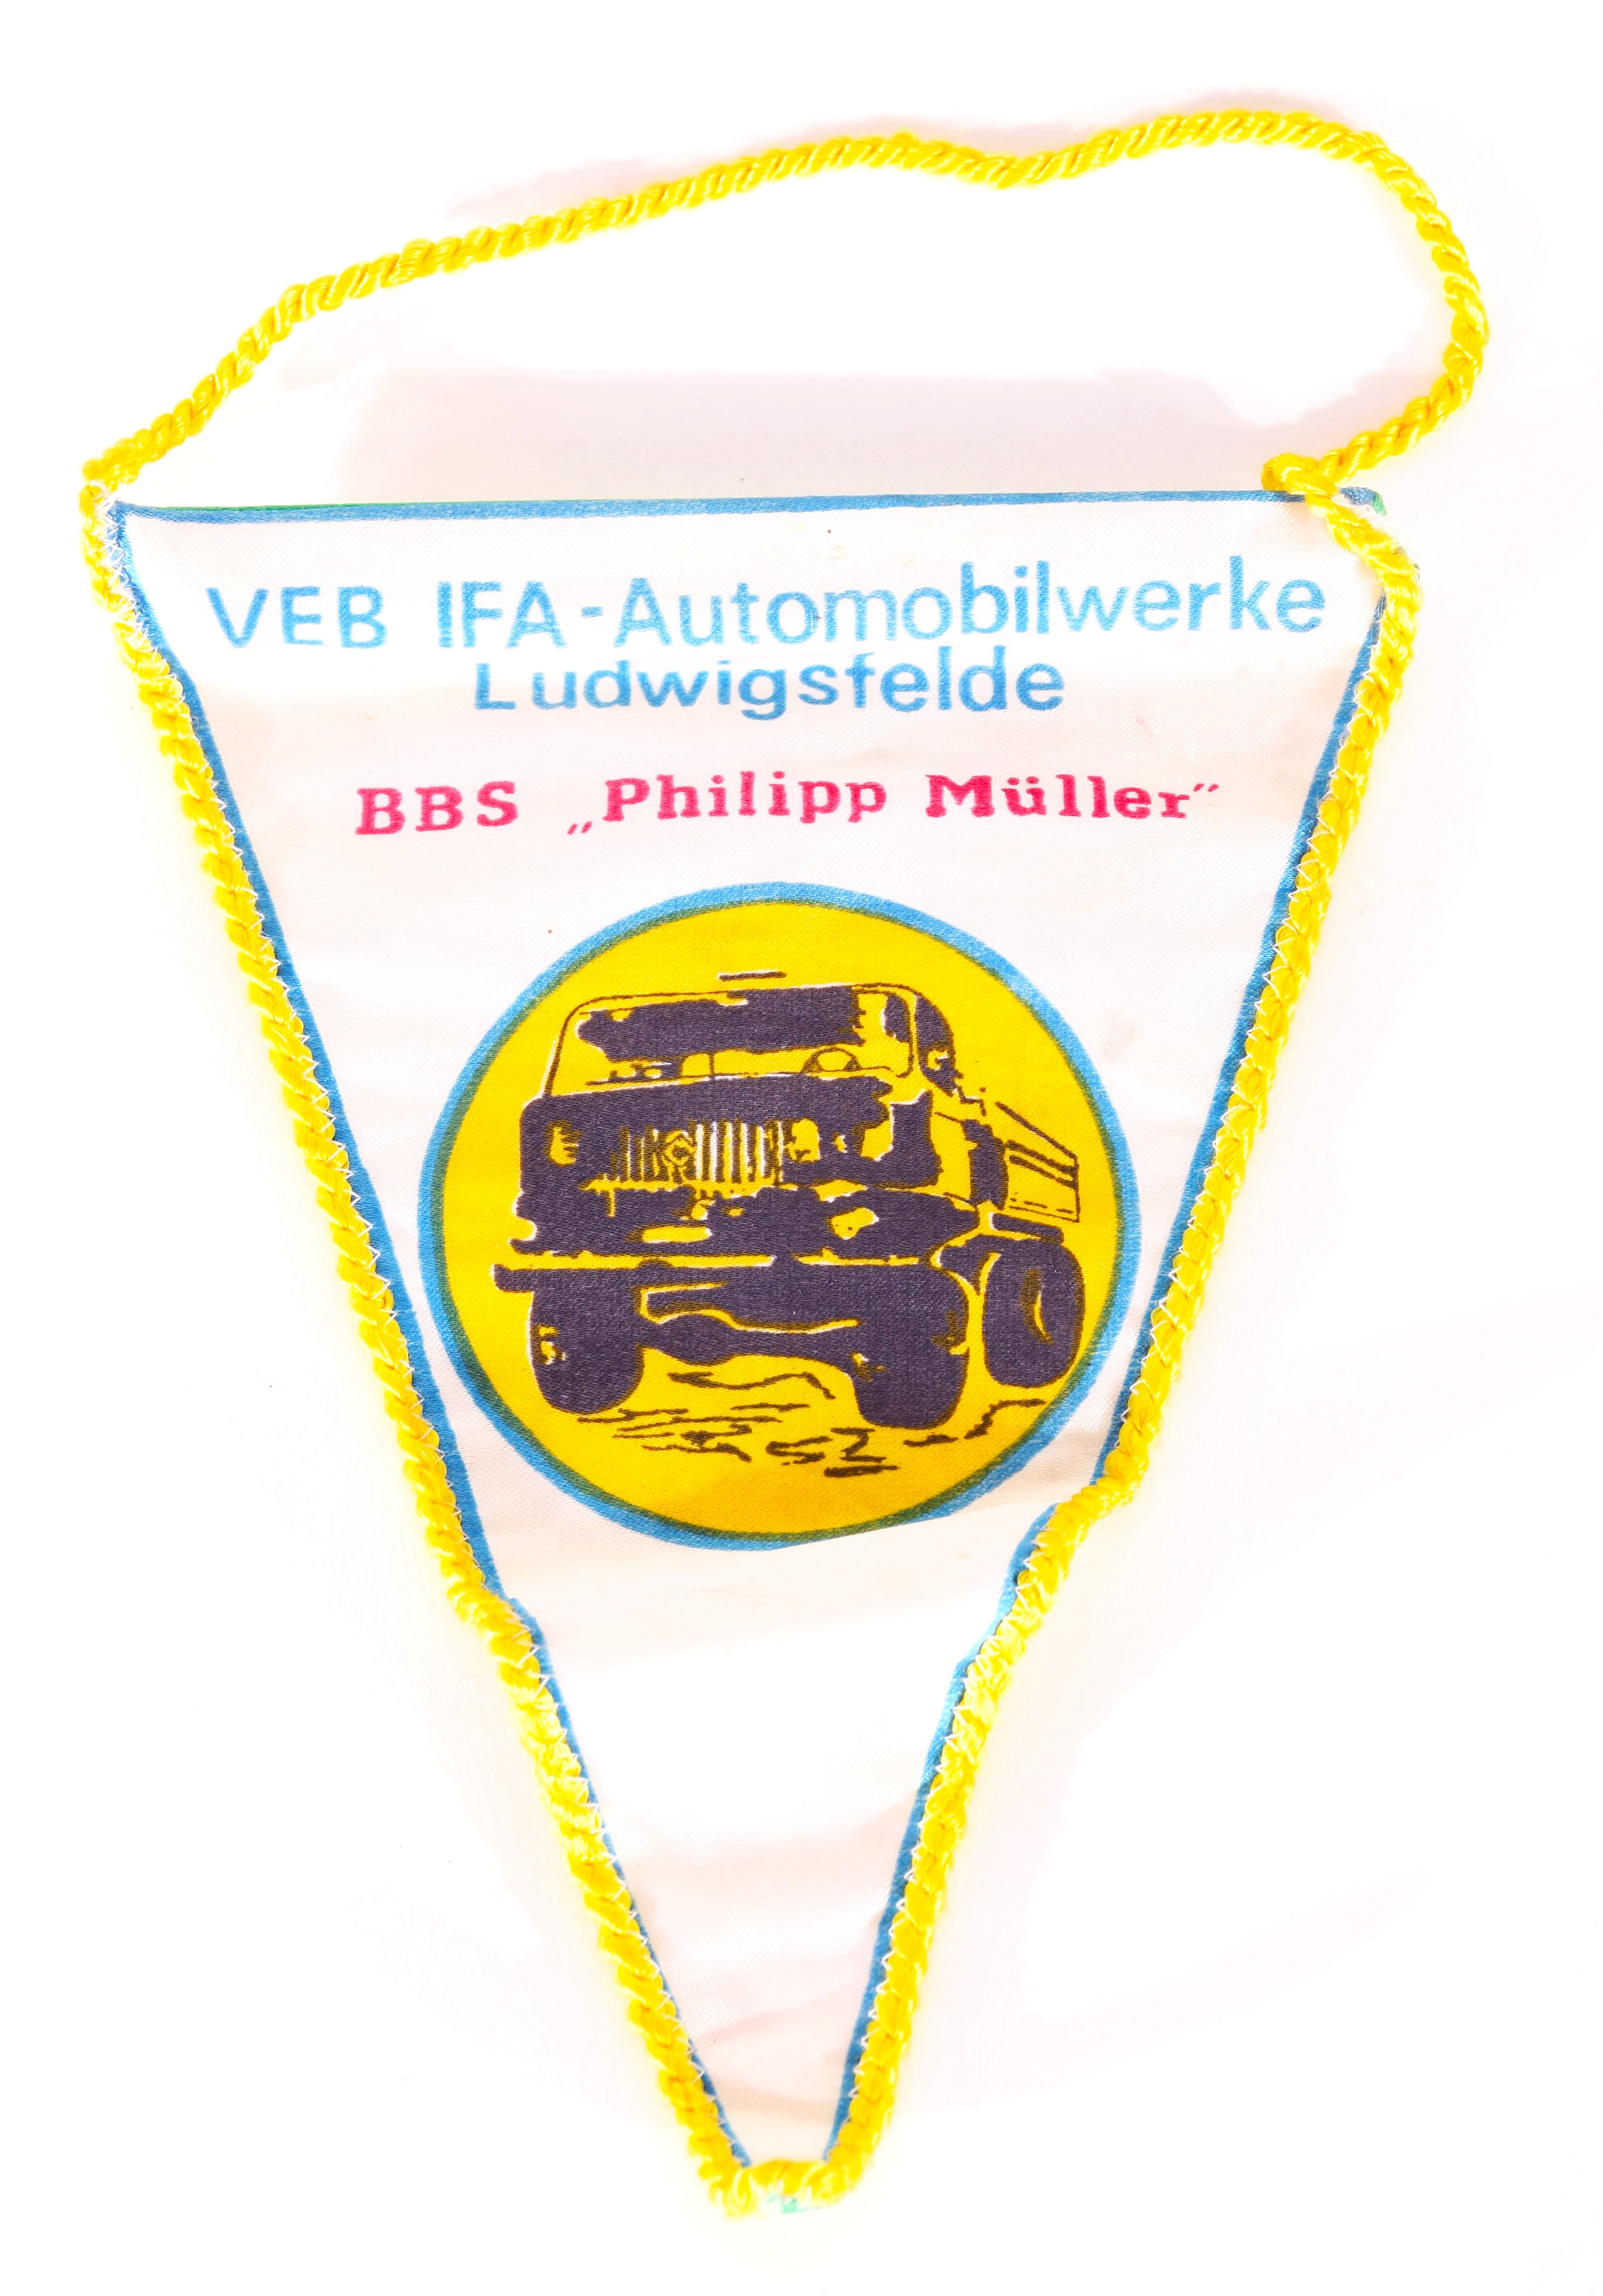 Wimpel "VEB IFA-Automobilwerke Ludwigsfelde BBS Philipp Müller" (Stadt- und Technikmuseum Ludwigsfelde CC BY-NC-SA)